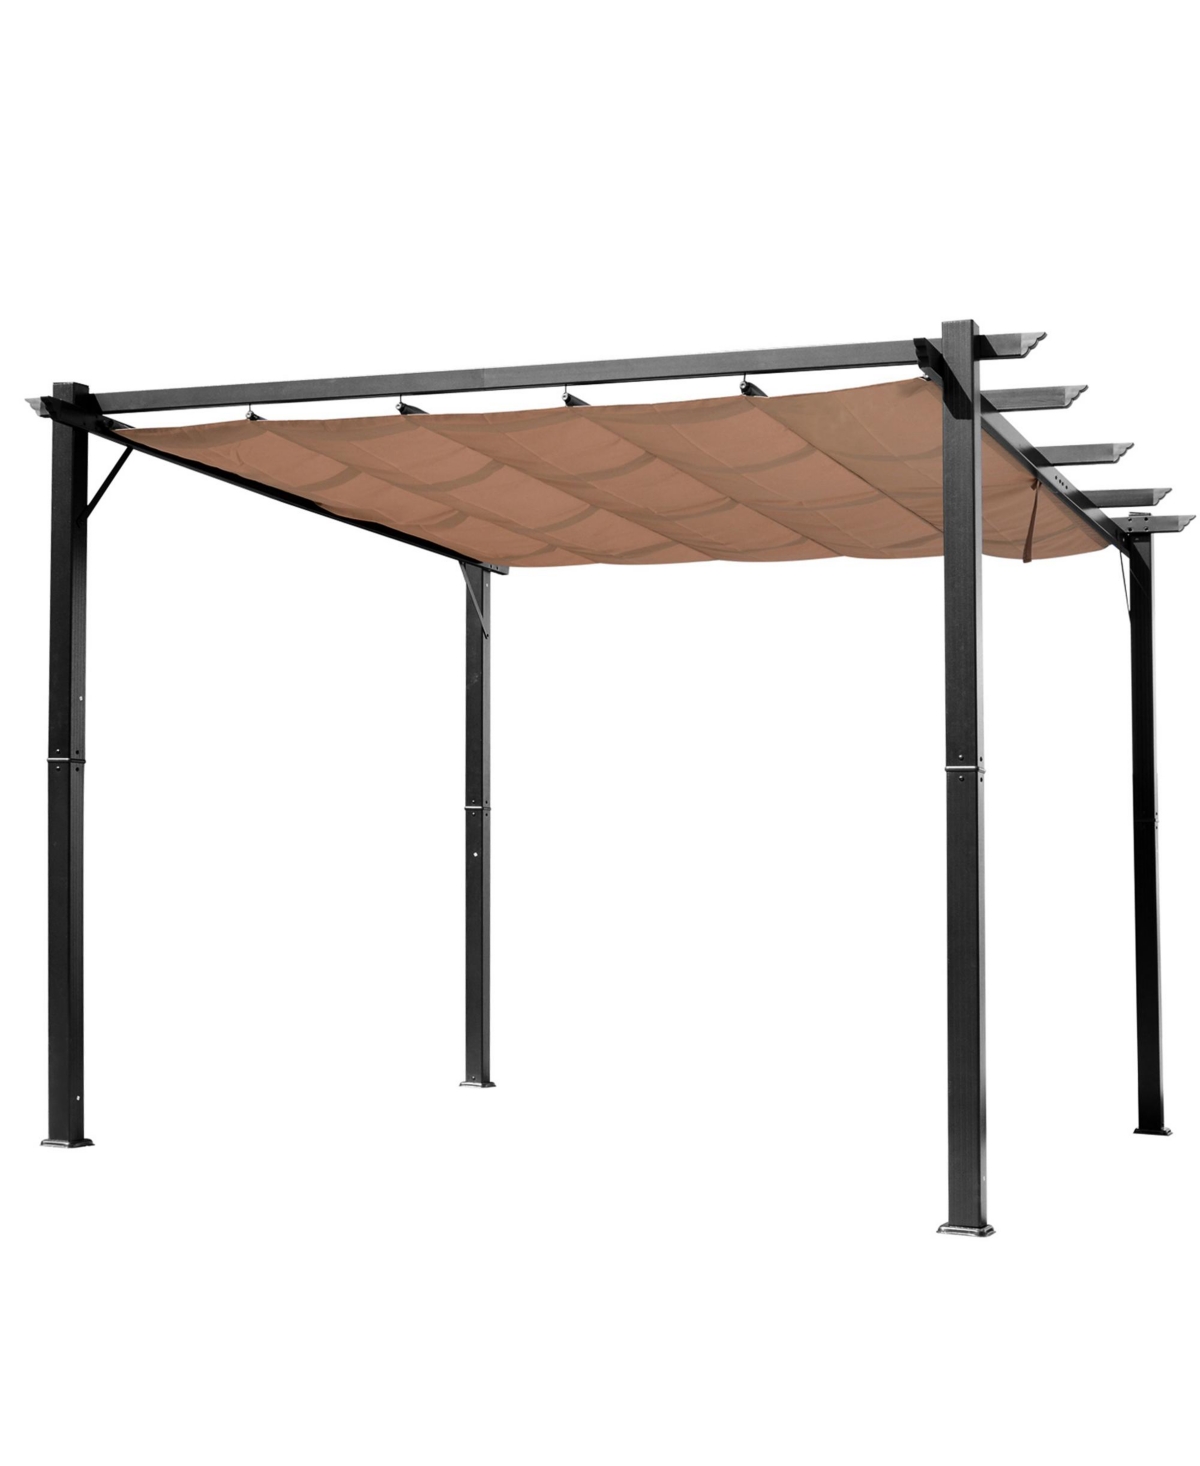 13.1' x 9.8' Outdoor Retractable Pergola Canopy, Aluminum Patio Pergola, Backyard Shade Shelter for Porch Party, Garden, Grill Gazebo - Charc